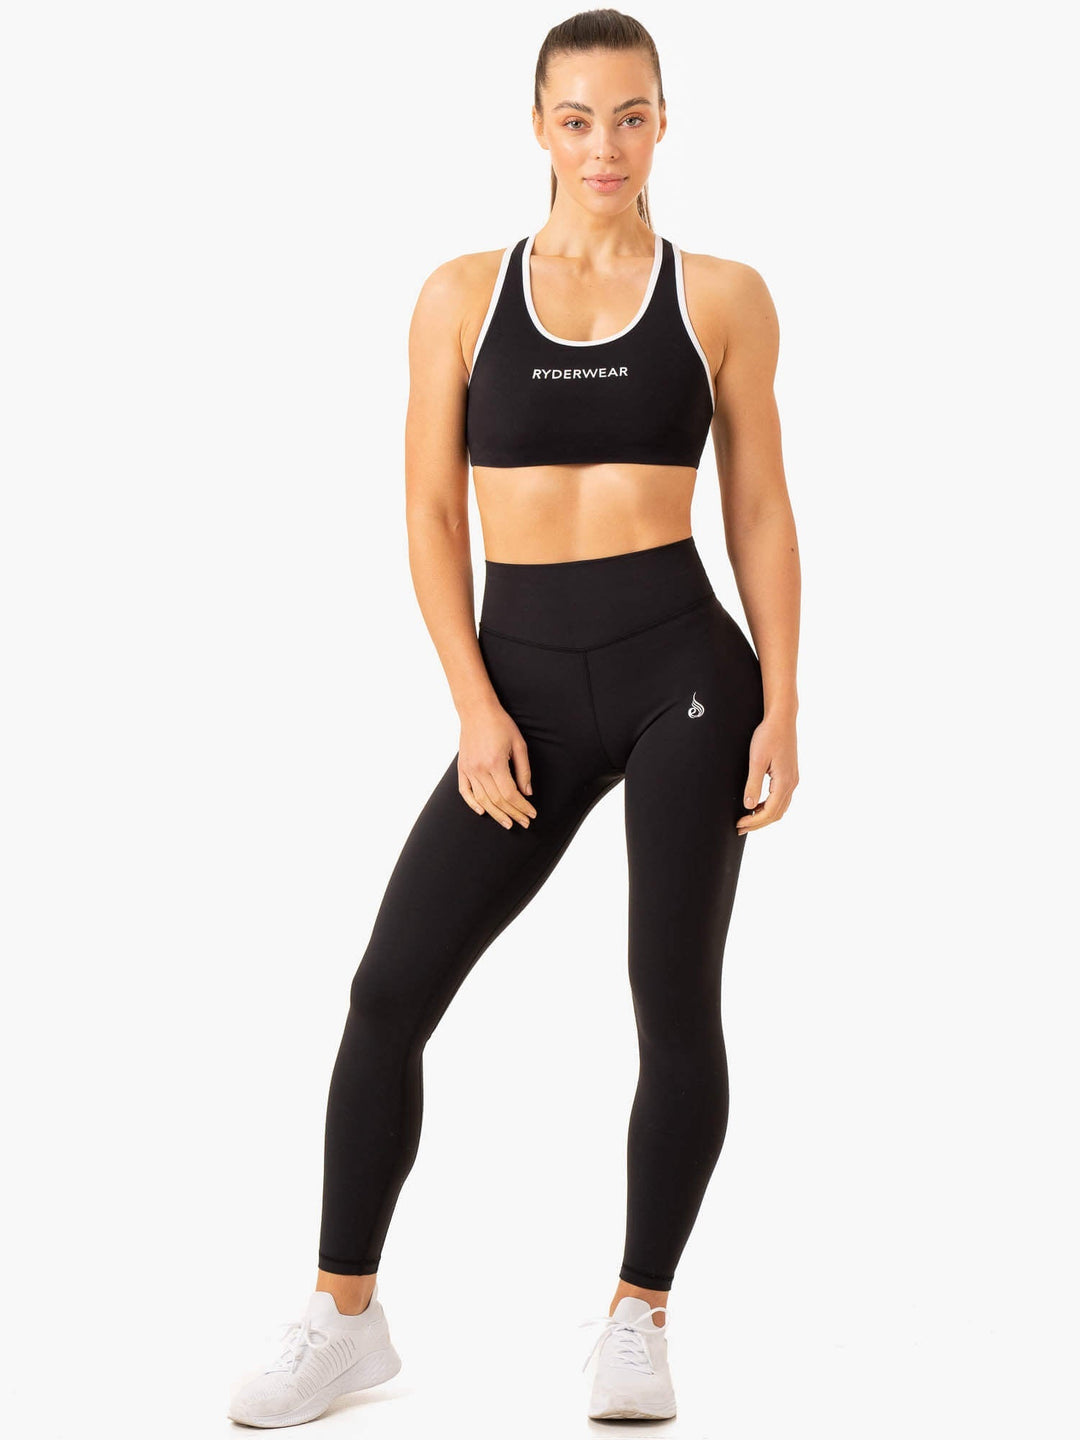 Ryderwear Sports Bra Black Size M - $26 (35% Off Retail) - From Ailie